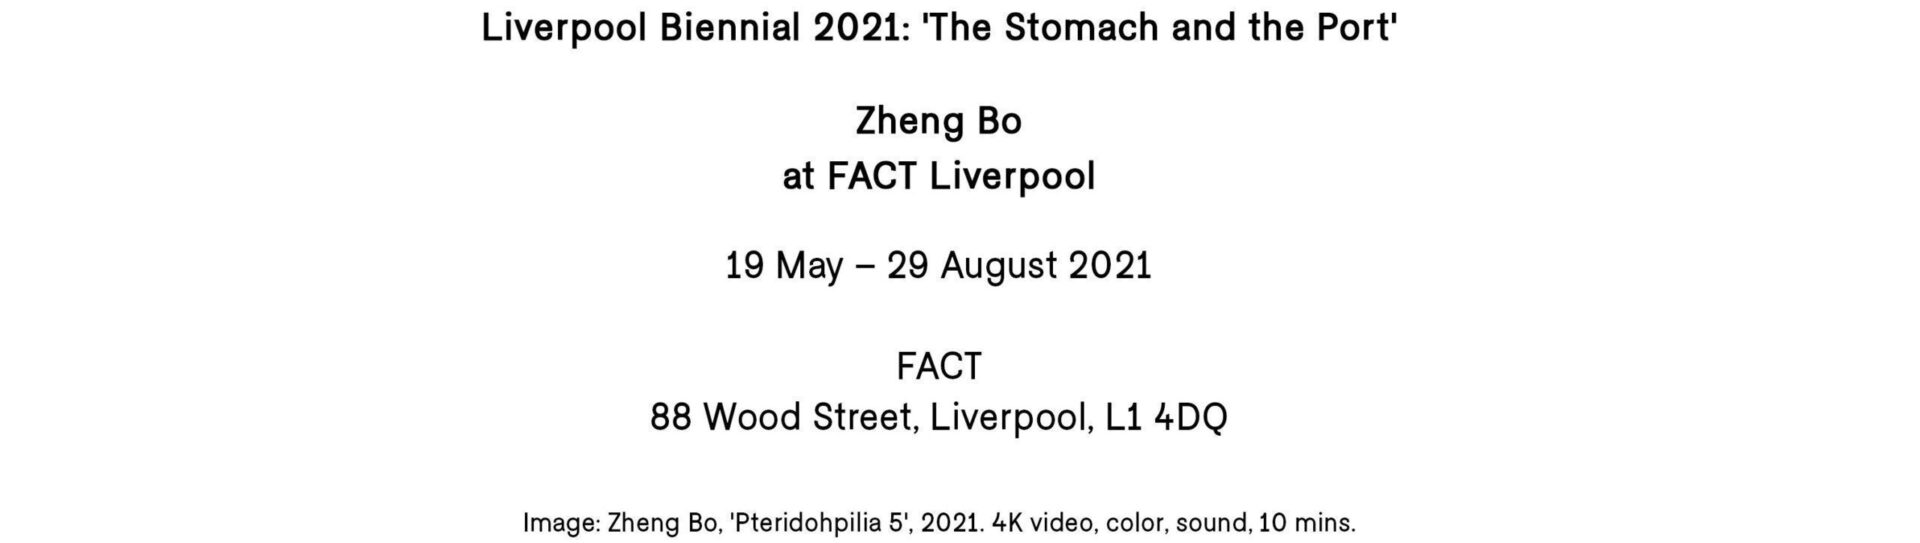 Zheng Bo at Liverpool Biennial 2021